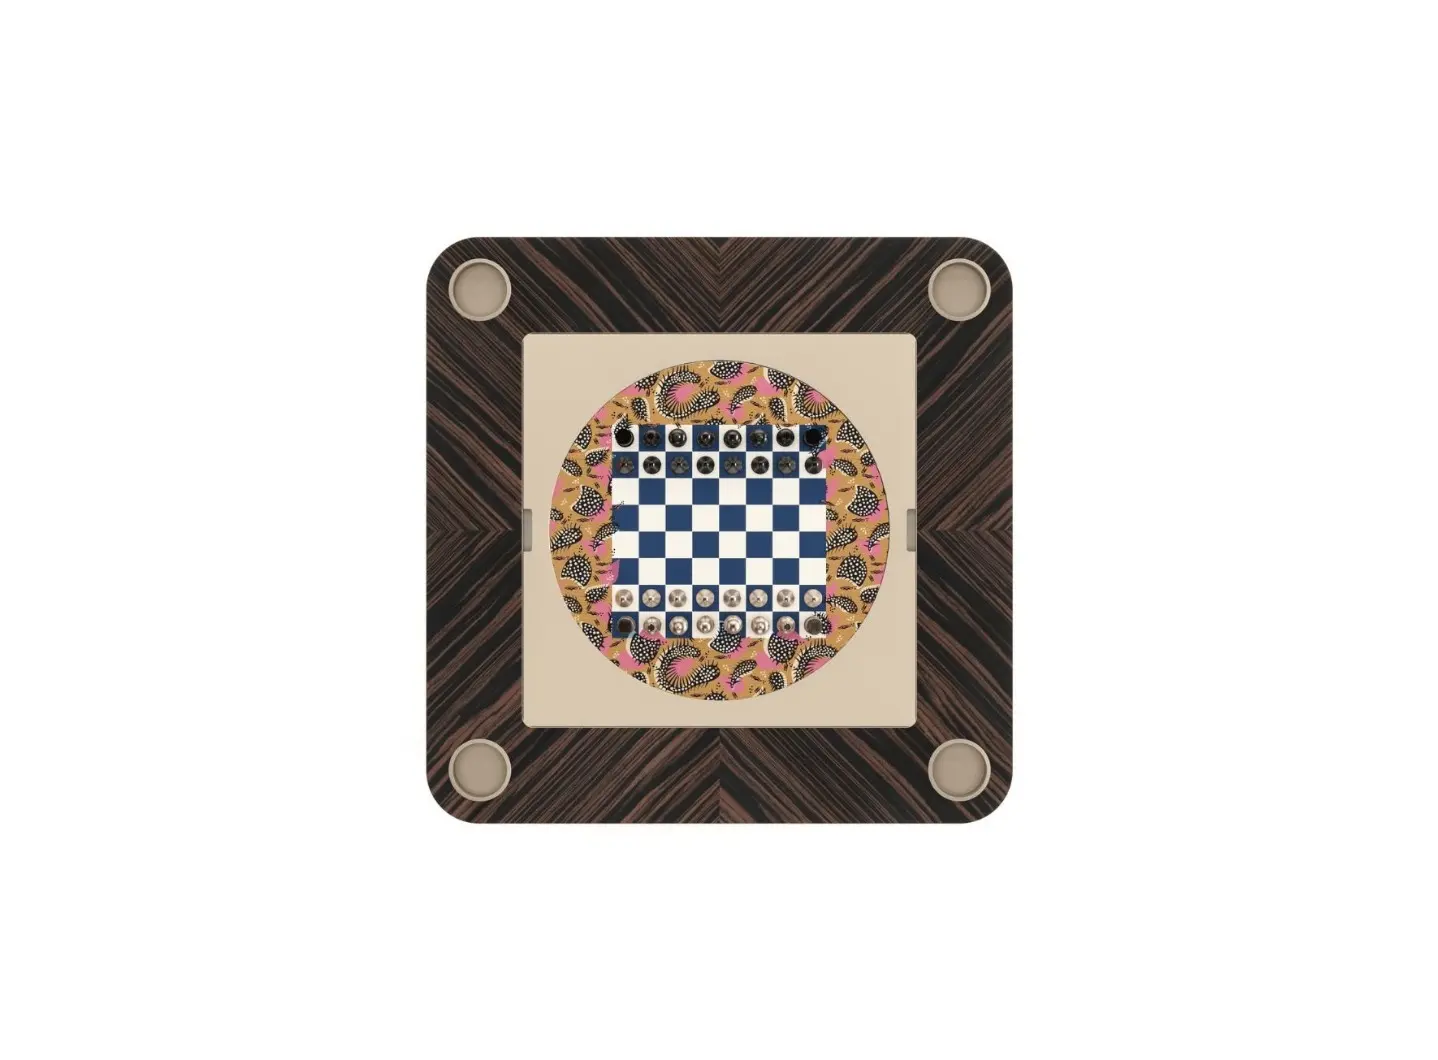 Vismara Design - Enigma Chess Table